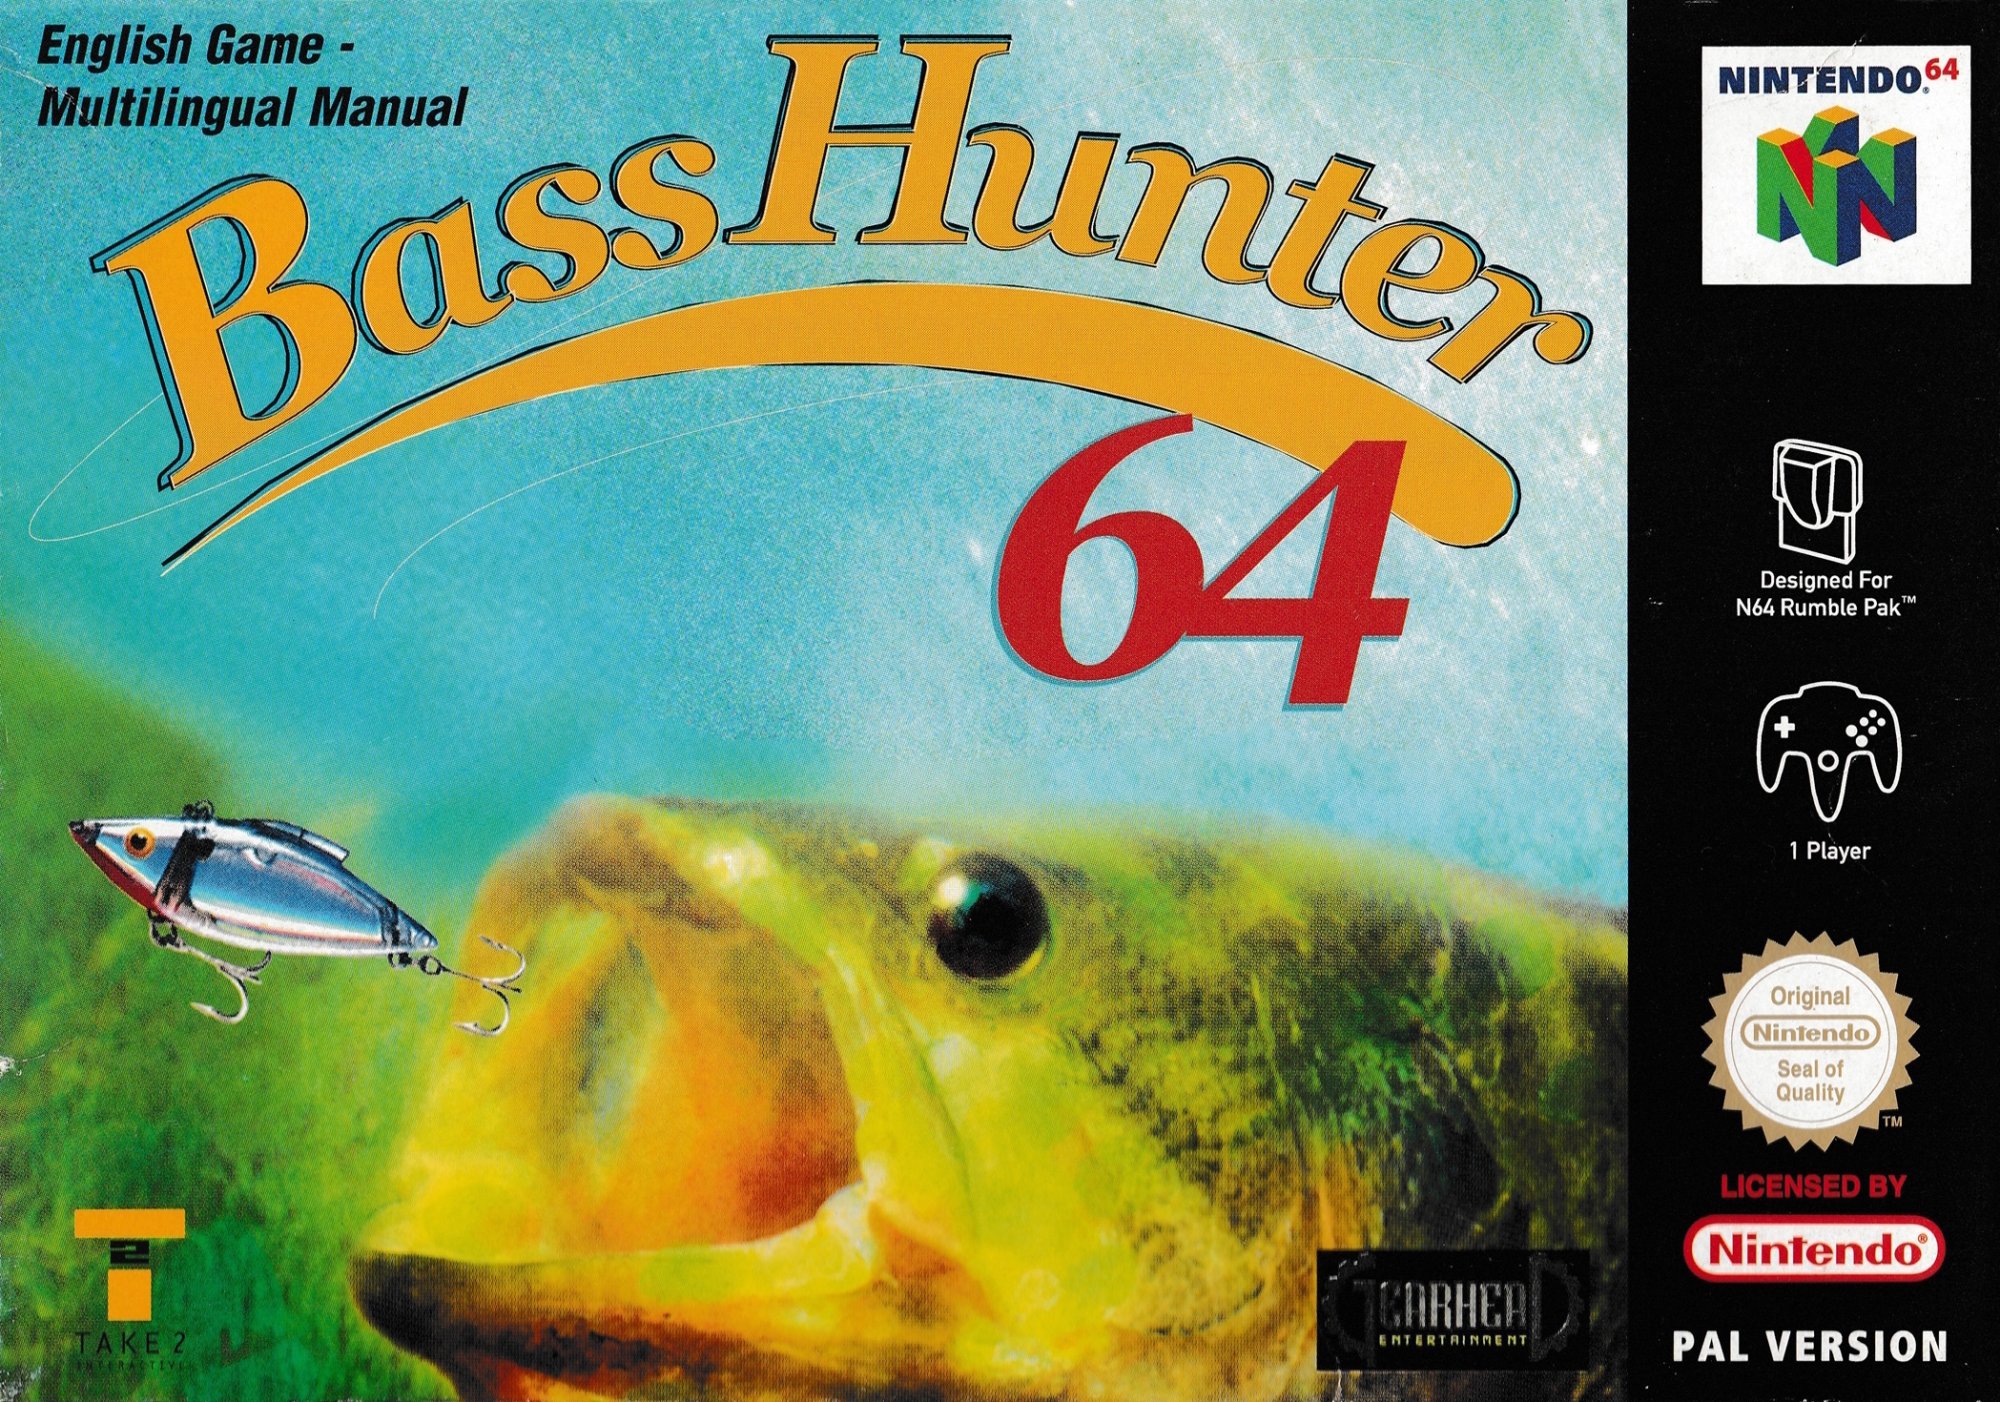 Bass Hunter 64